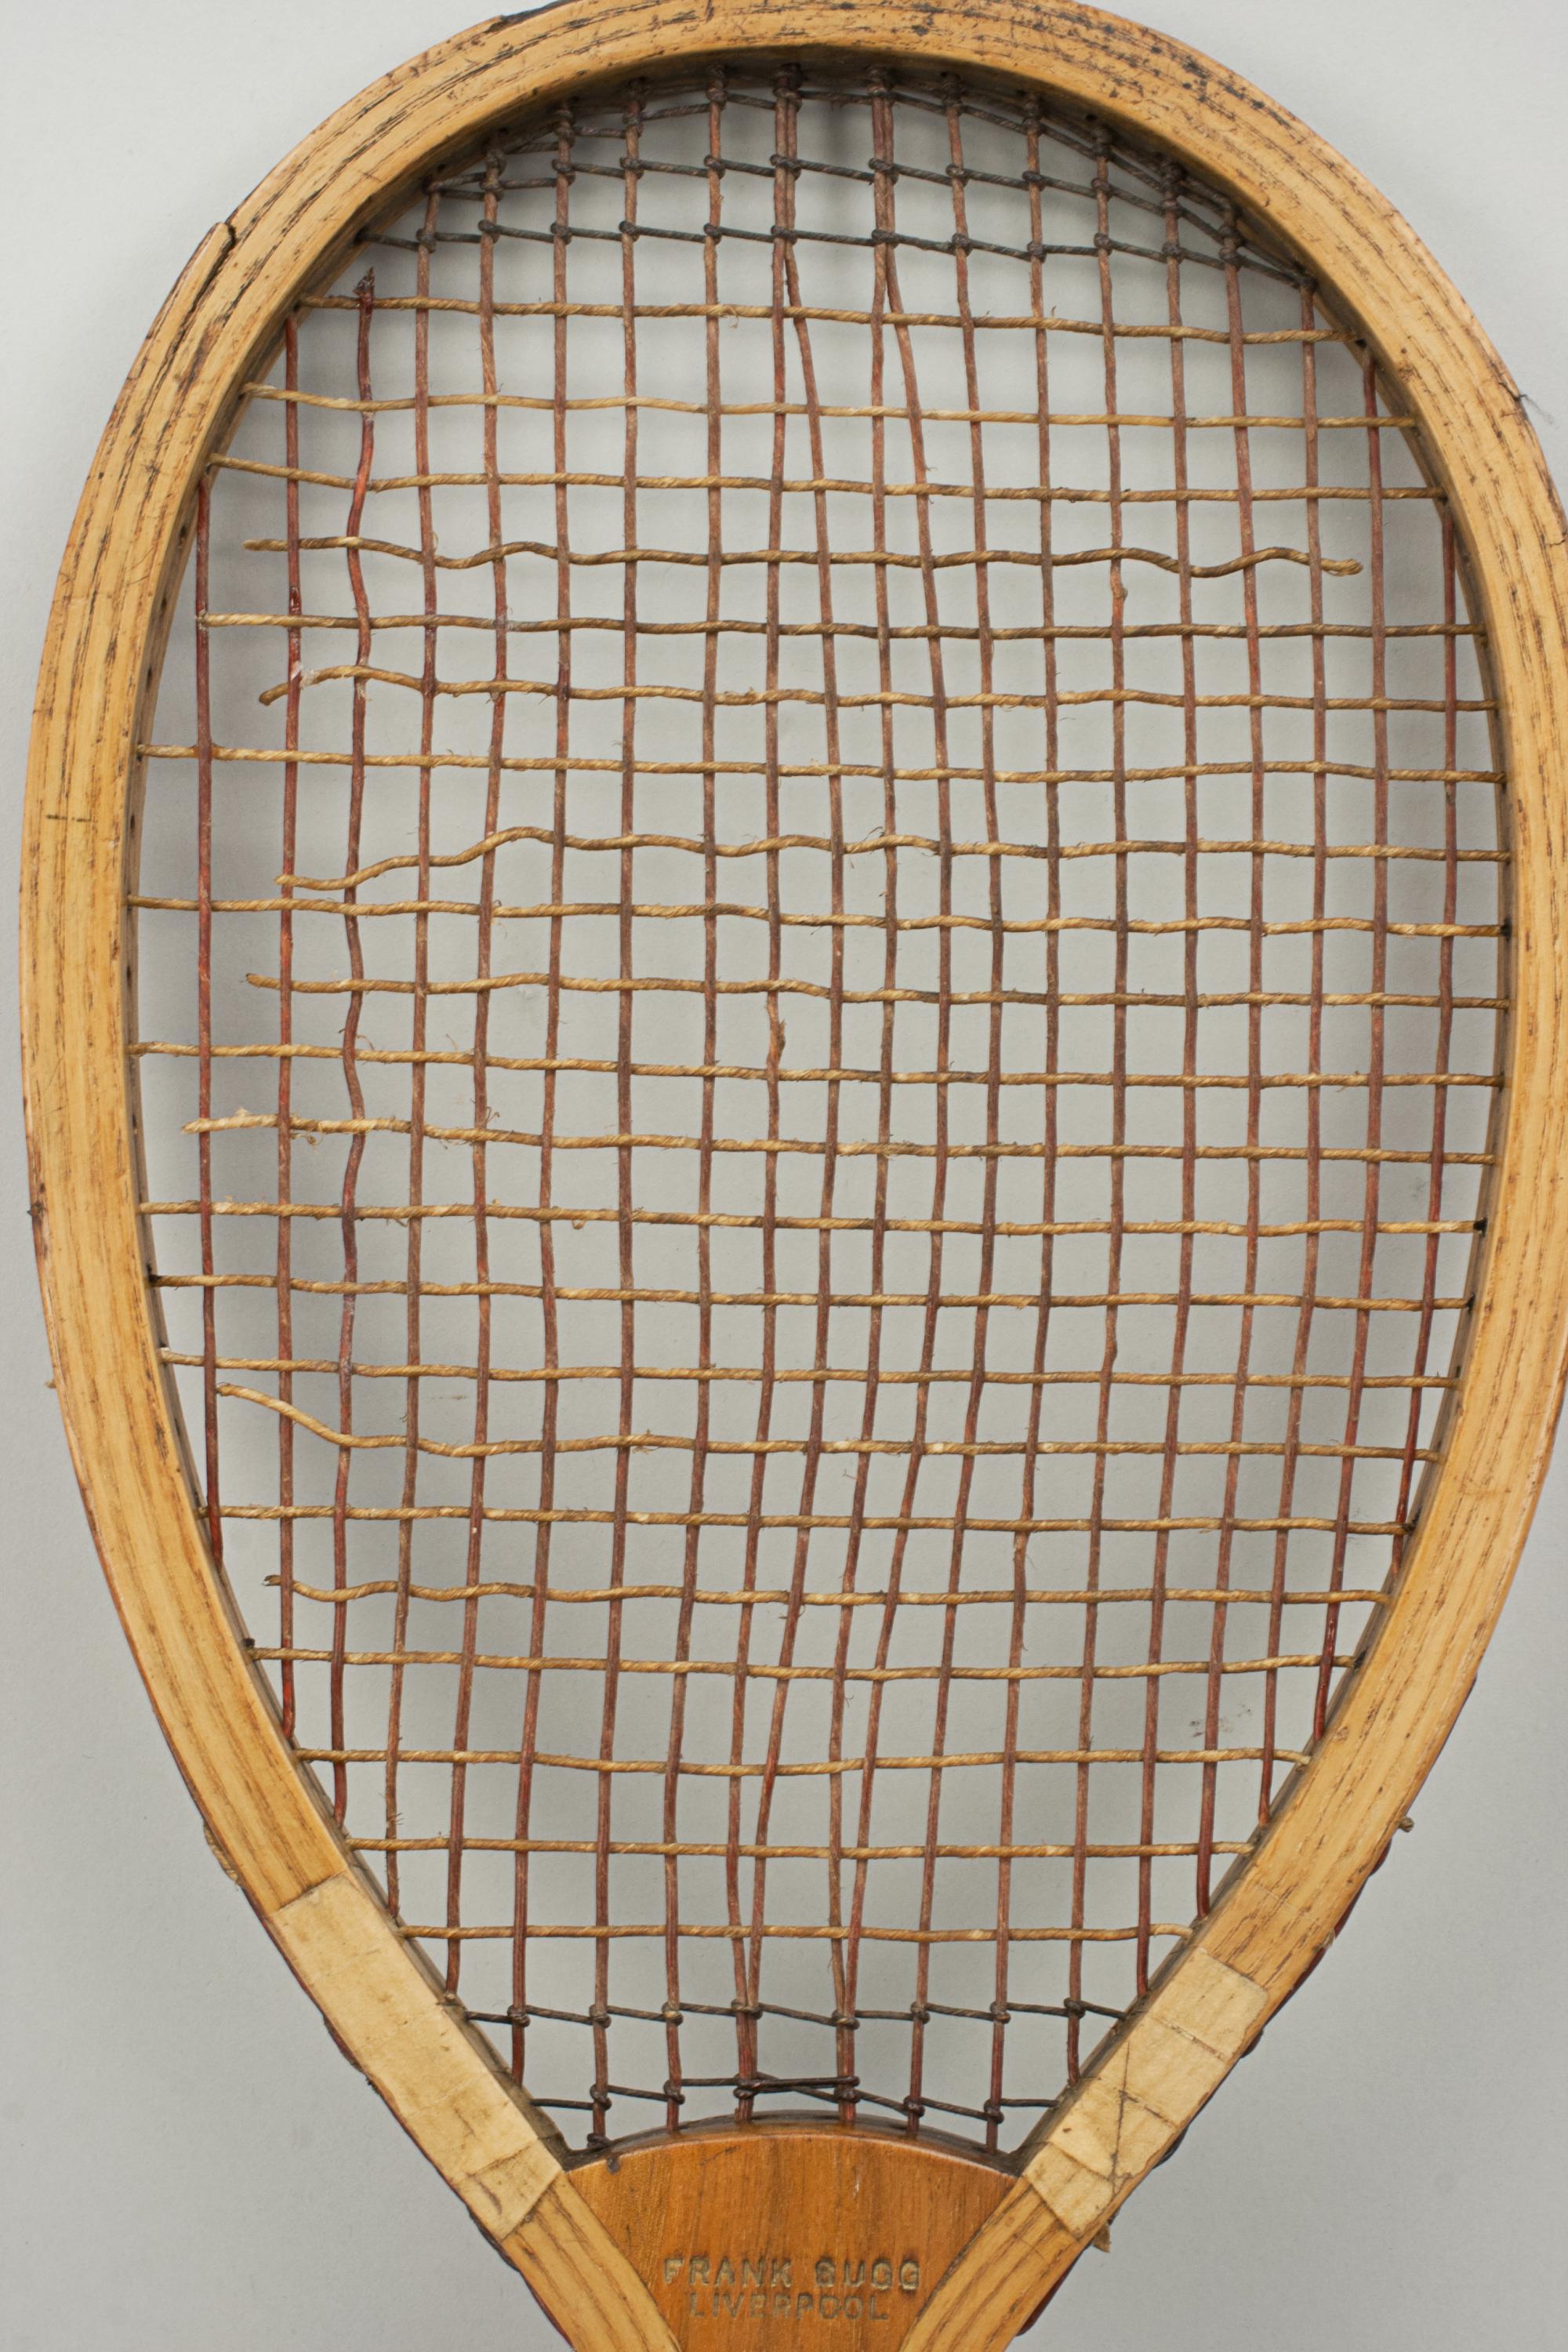 racket involving old vessel